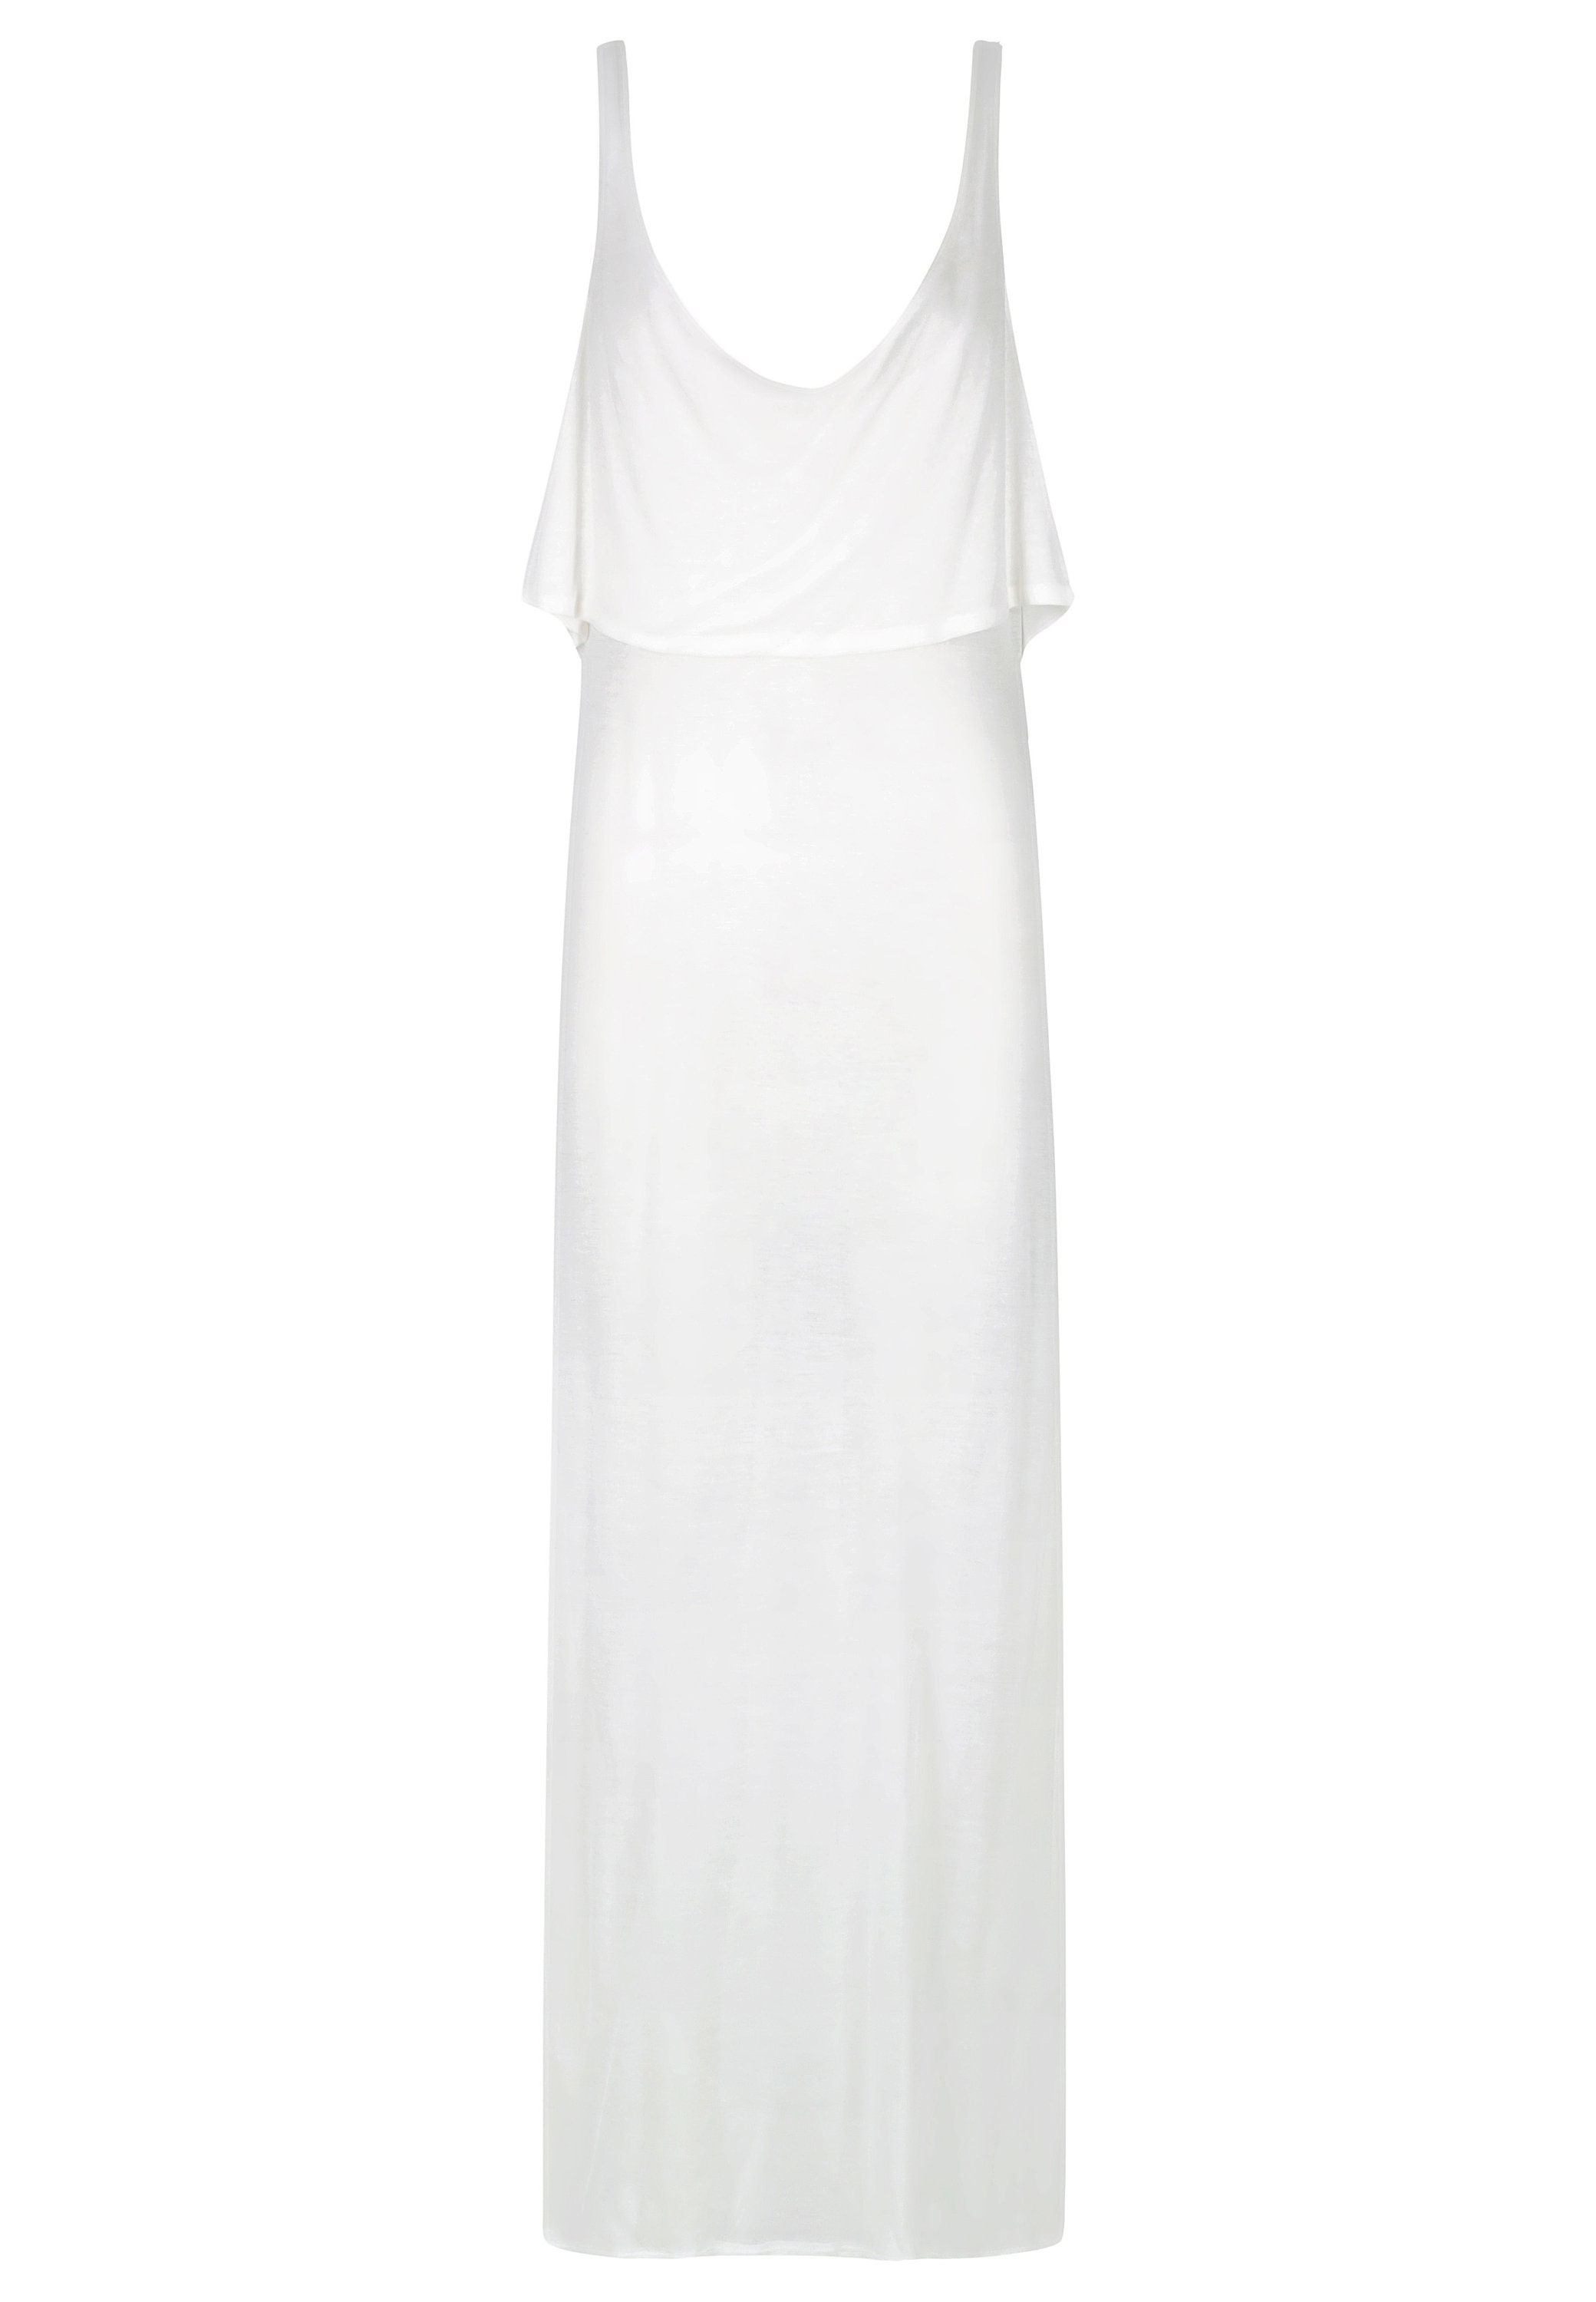 Sheer White Maxi Dress Summer Maxi Dress Coverup Dress - Etsy